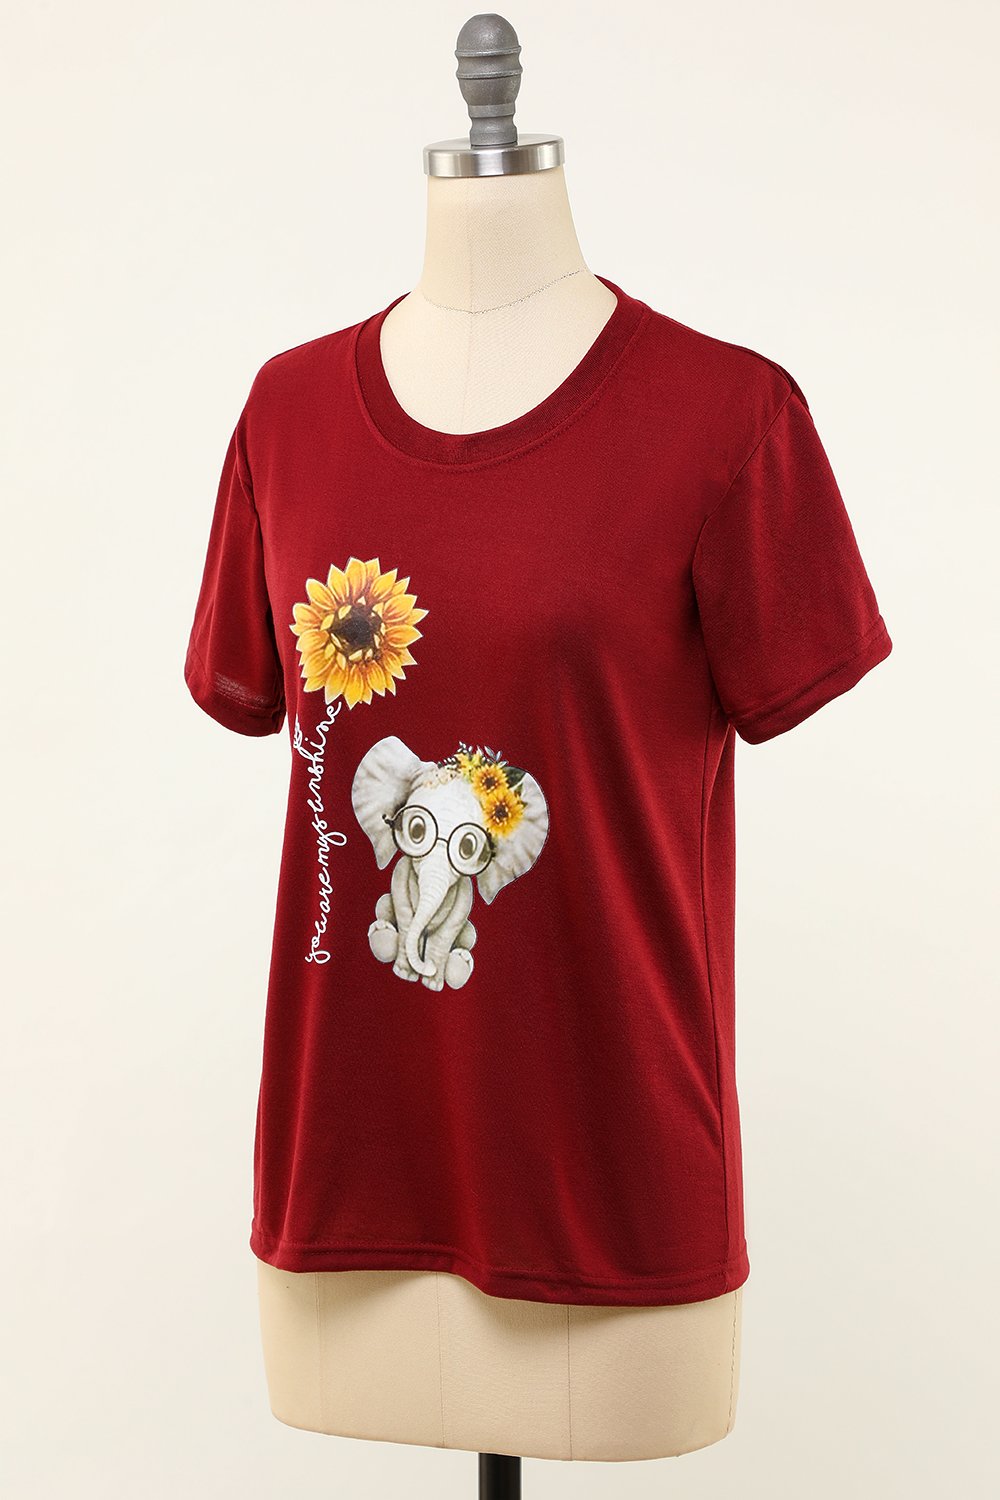 Elephant Sunflower Printed T-Shirt